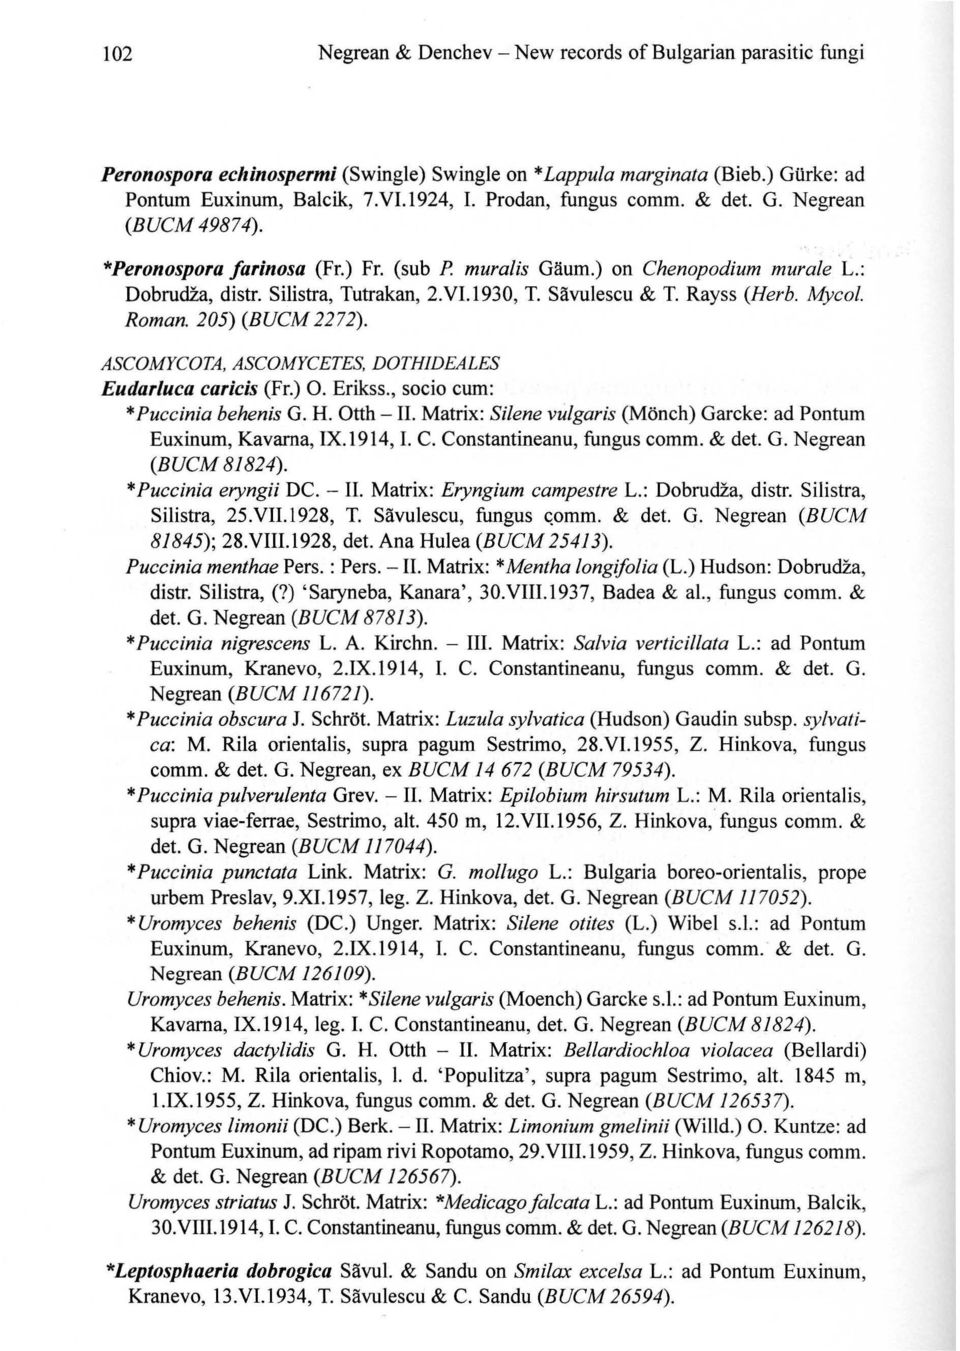 Rayss (Herb. Mycol. Roman. 205) (BUCM 2272). ASCOMYCOTA, ASCOMYCETES, DOTHIDEALES Eudarluca caricis (Fr.) O. Erikss., socio cum: * Puccinia behenis G. H. Otth - II.